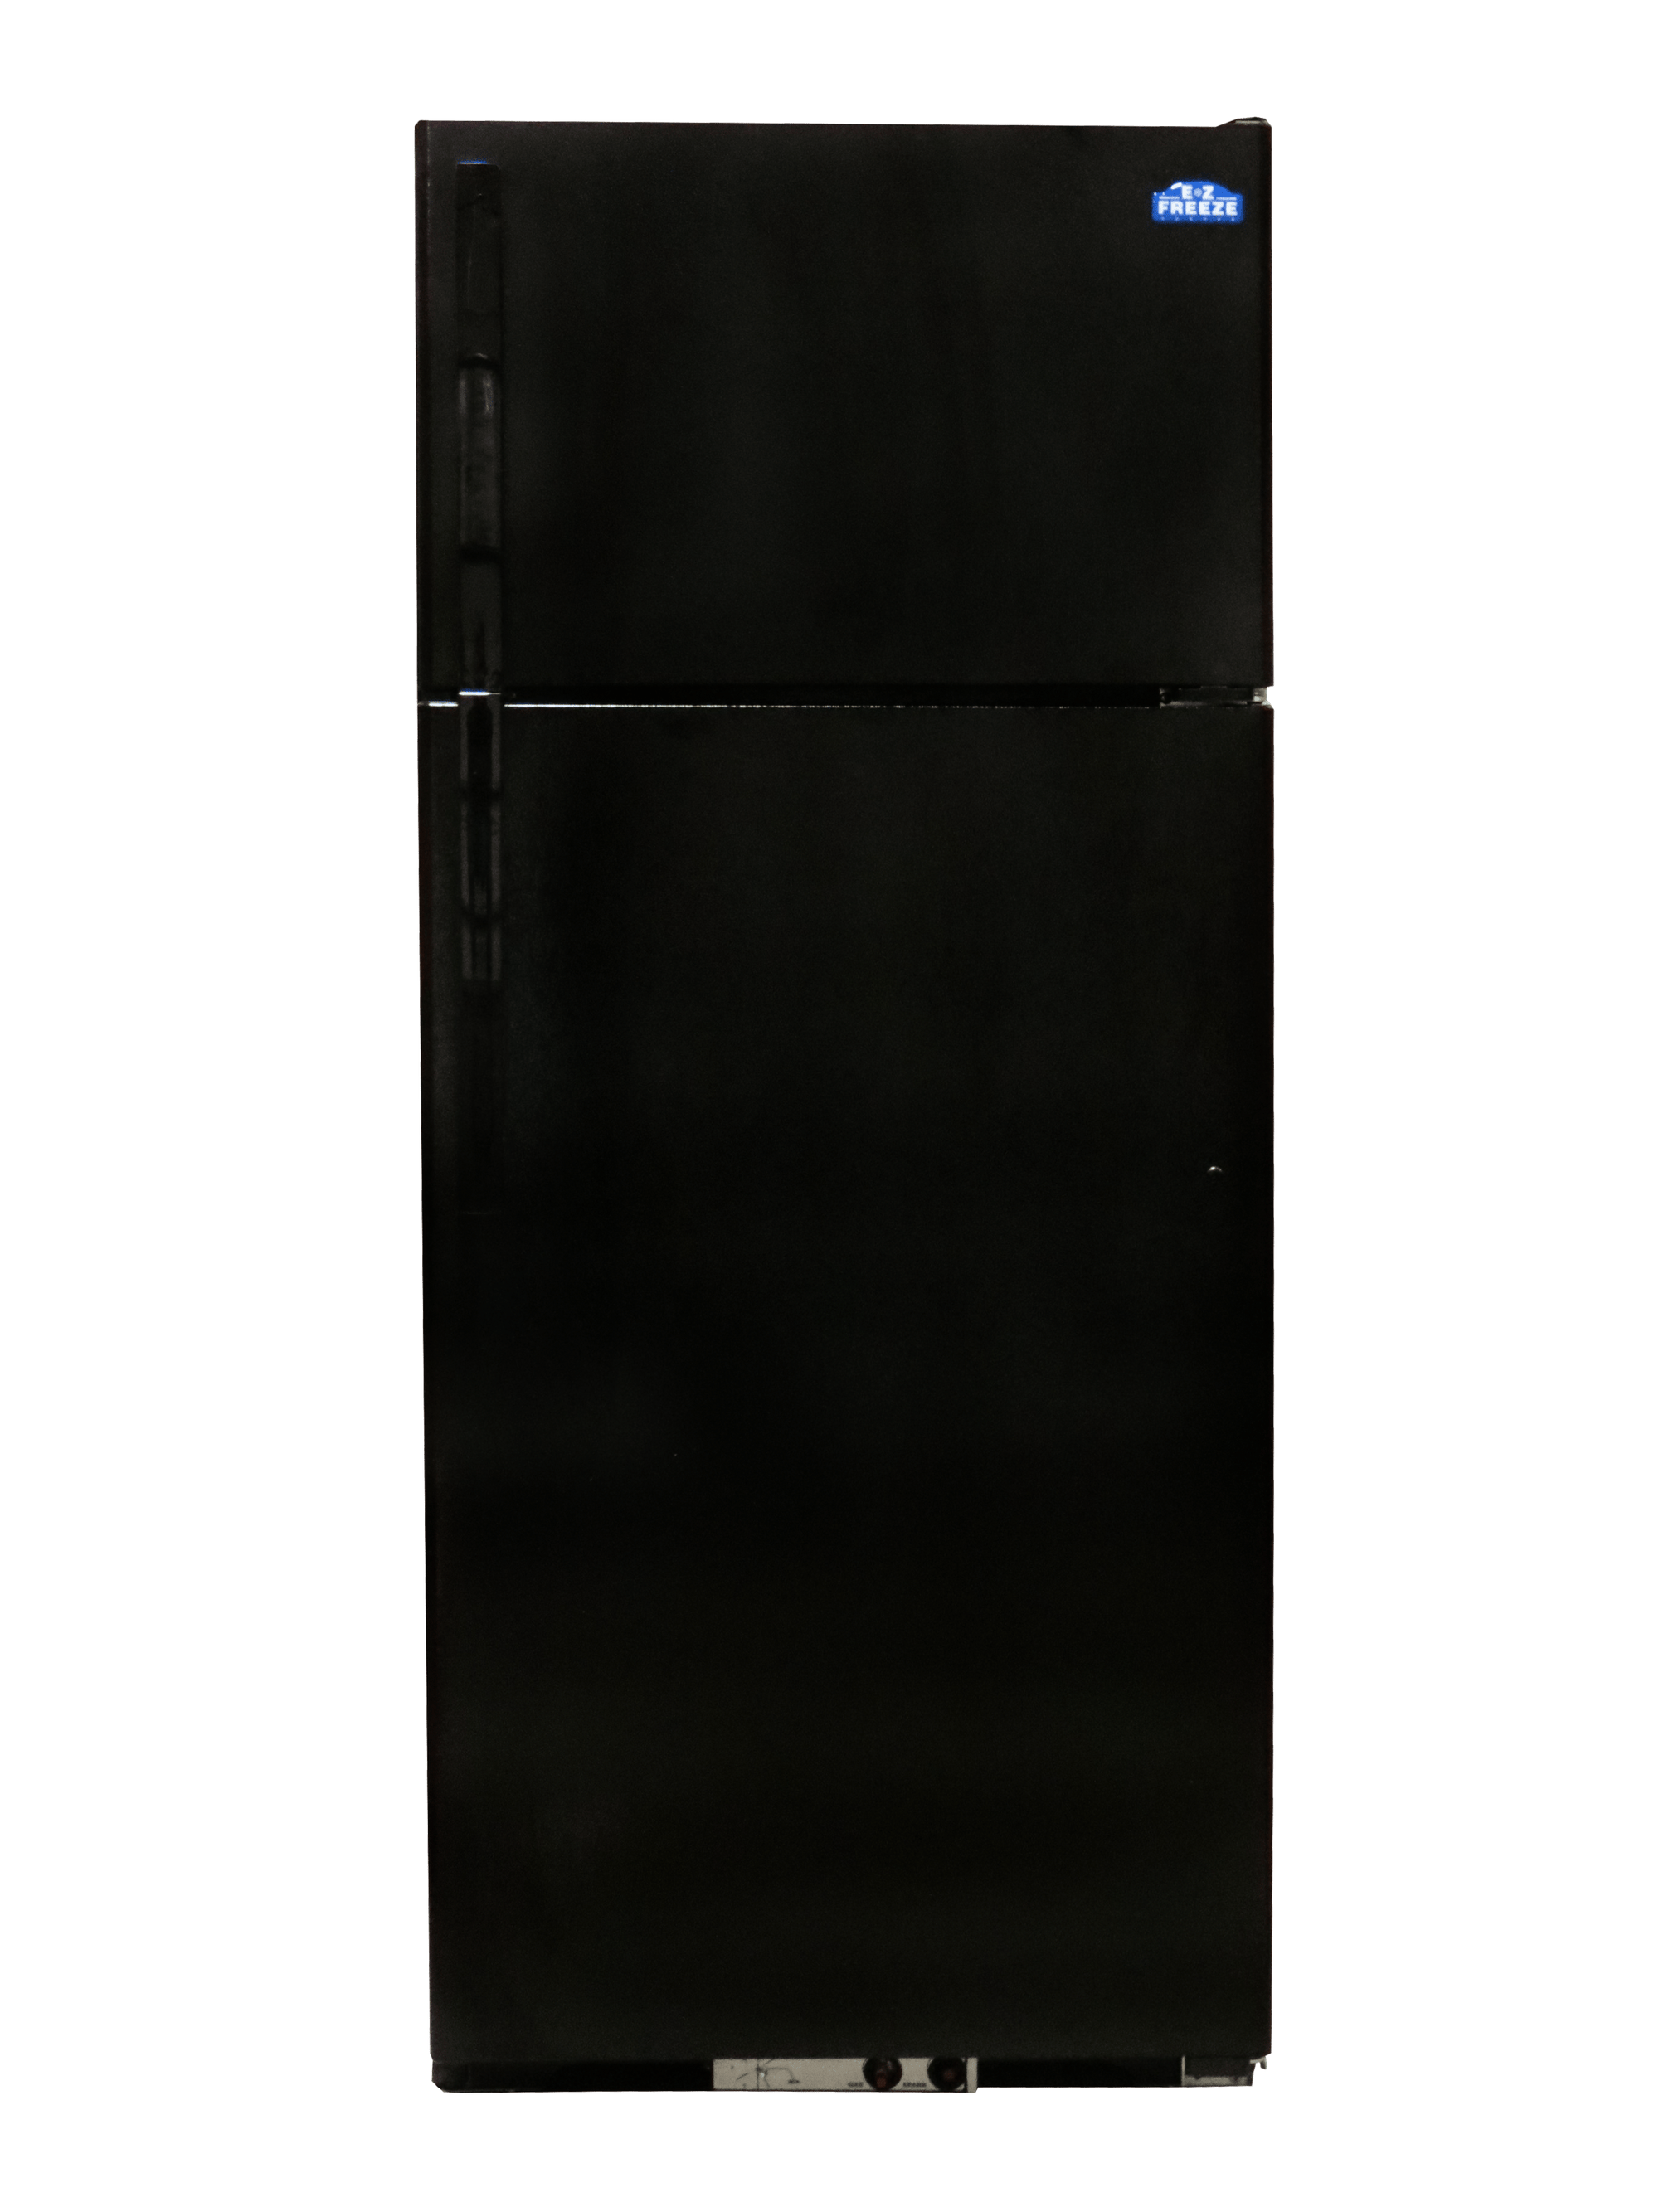 EZ Freeze Natural Gas Refrigerator EZ Freeze EZ-19BNG Natural Gas Refrigerator-Freezer in Black 19 cu ft.